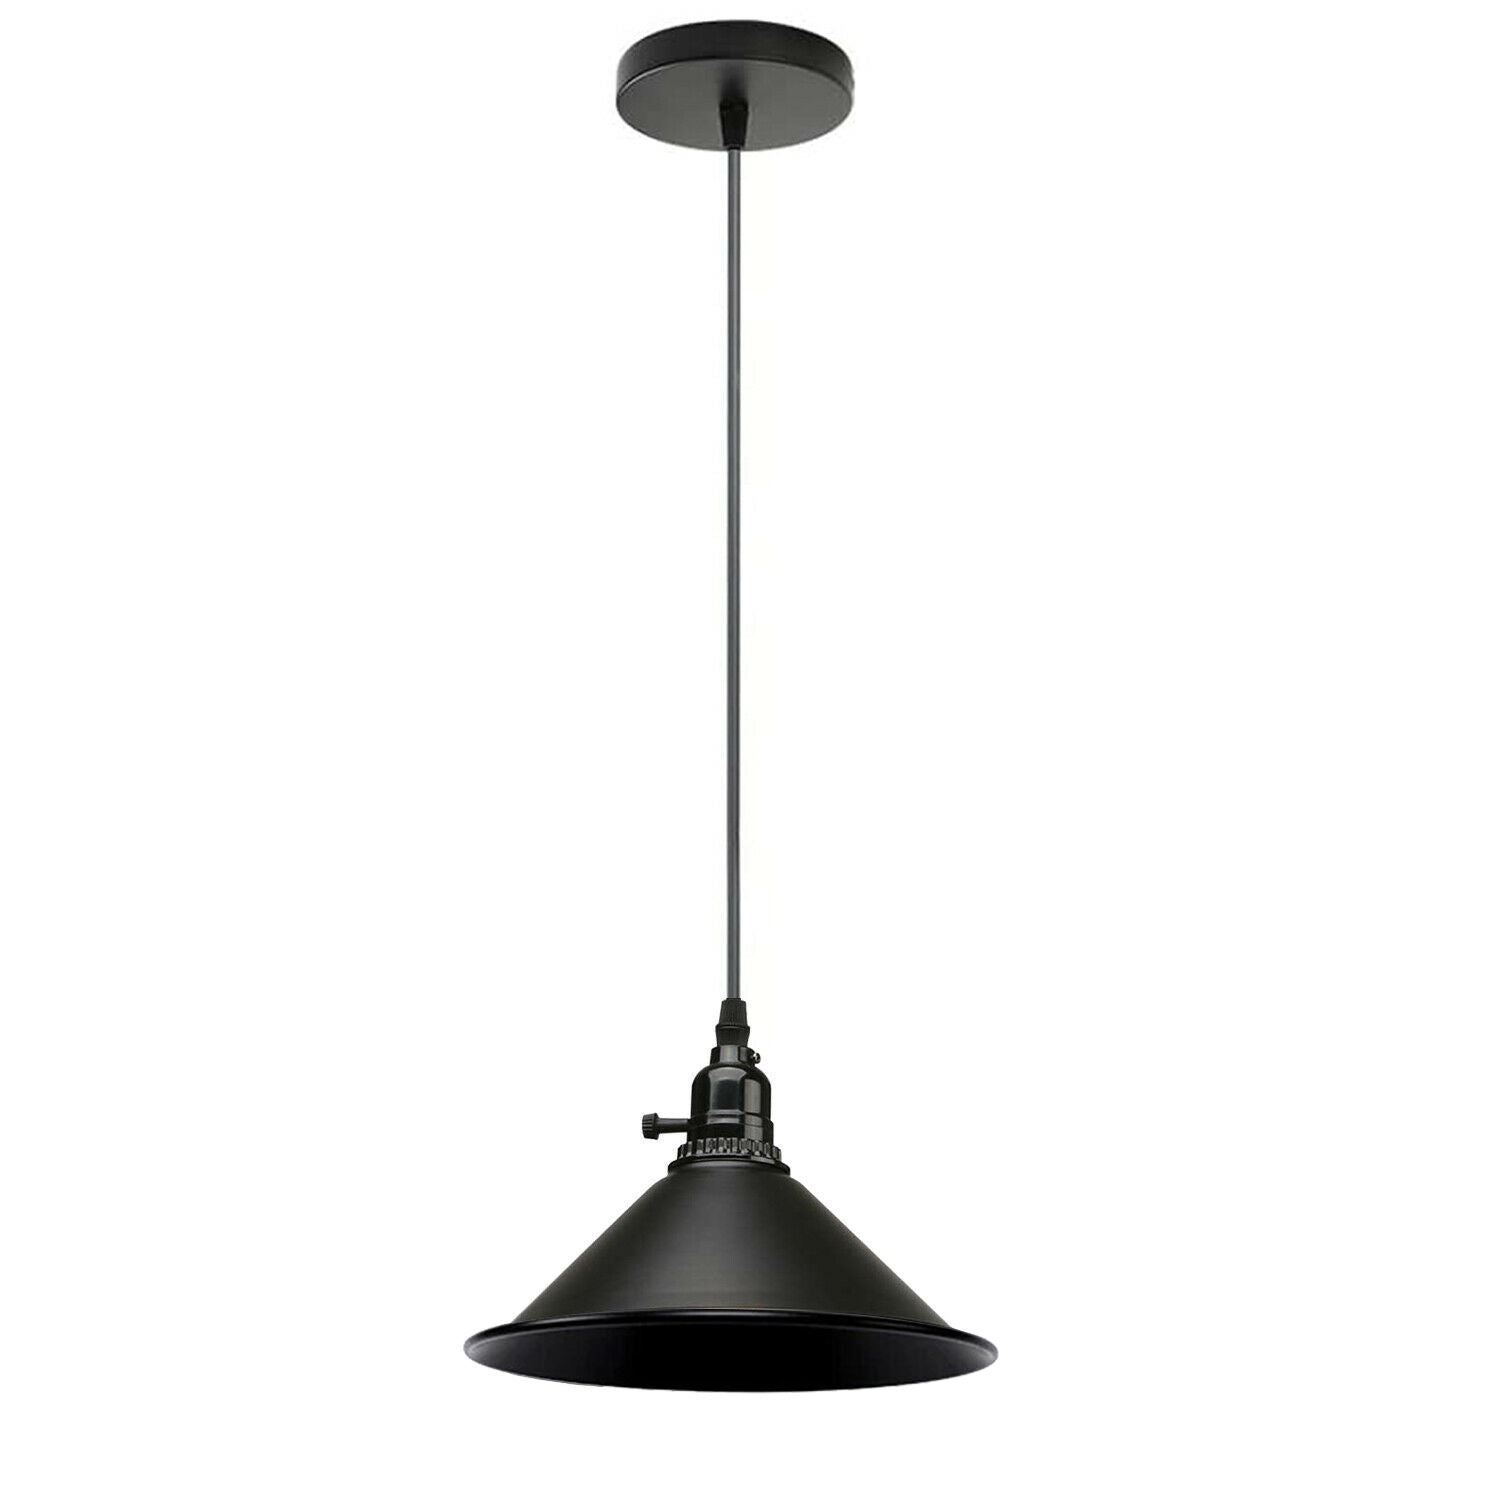 3 Way Vintage Industrial Ceiling Pendant Light Metal Retro Loft Hang Lampshade~1305 - LEDSone UK Ltd